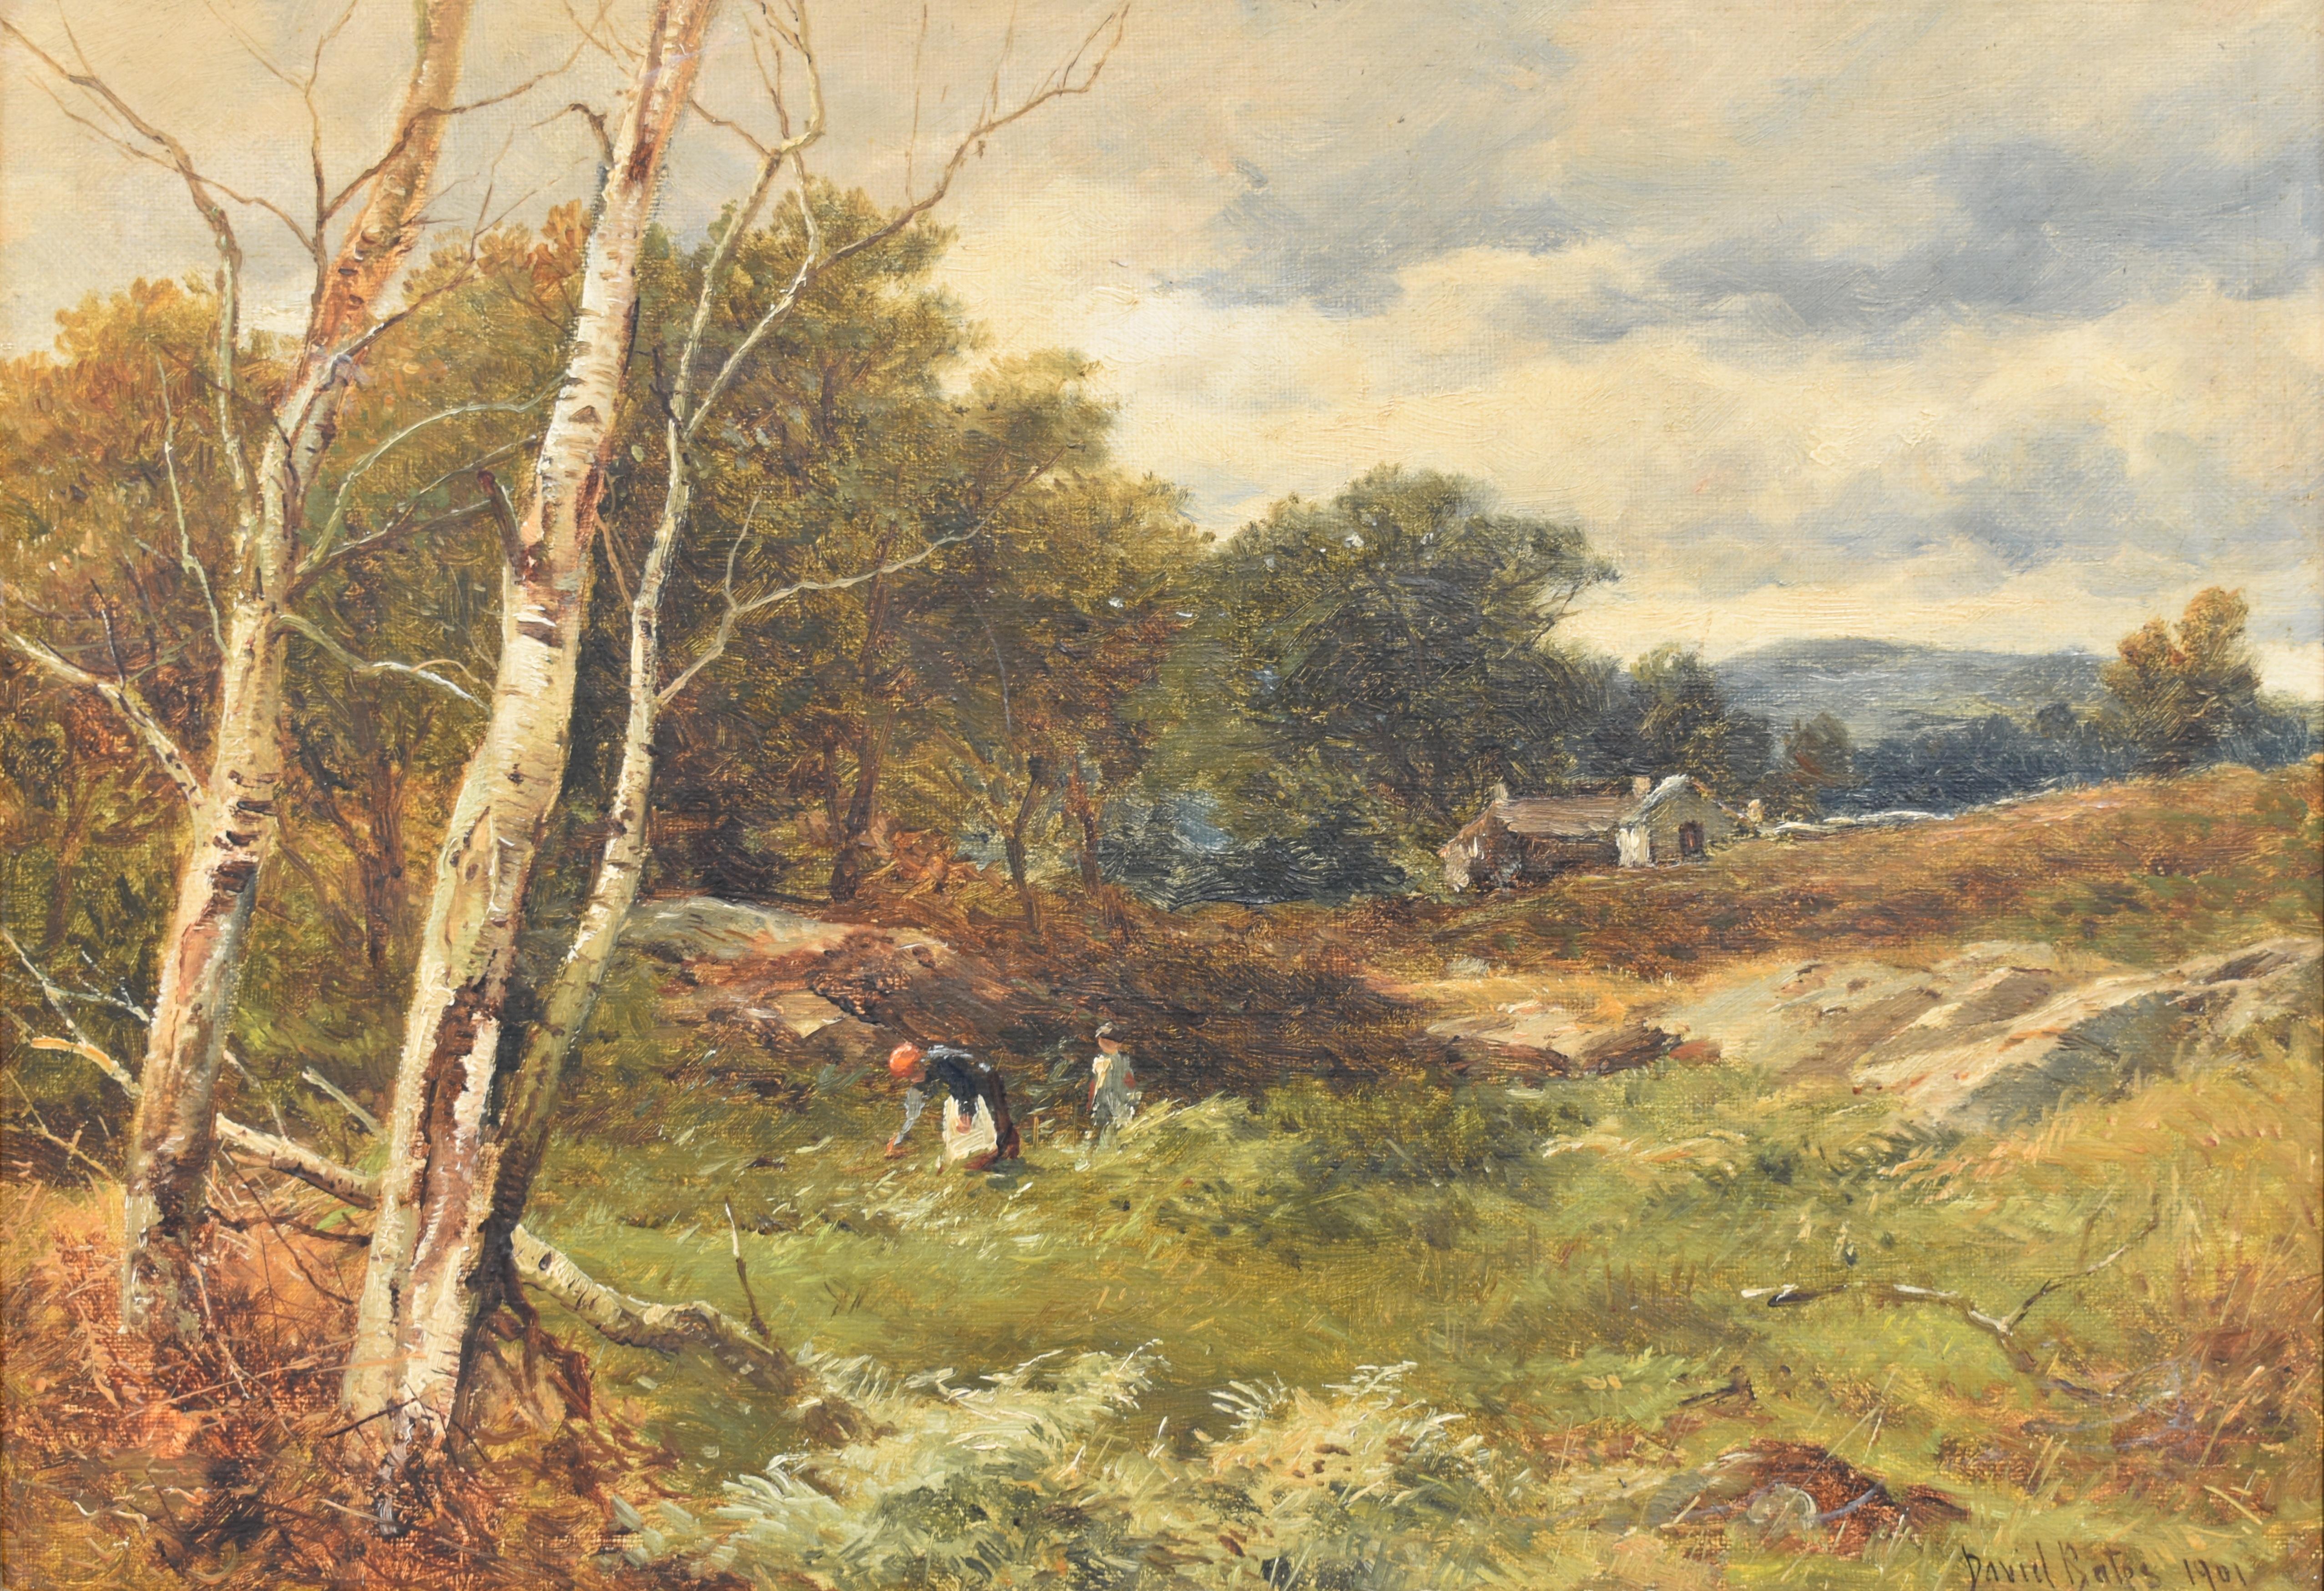 Capel Curig North Wales Landscape - Painting by David Bates b.1840